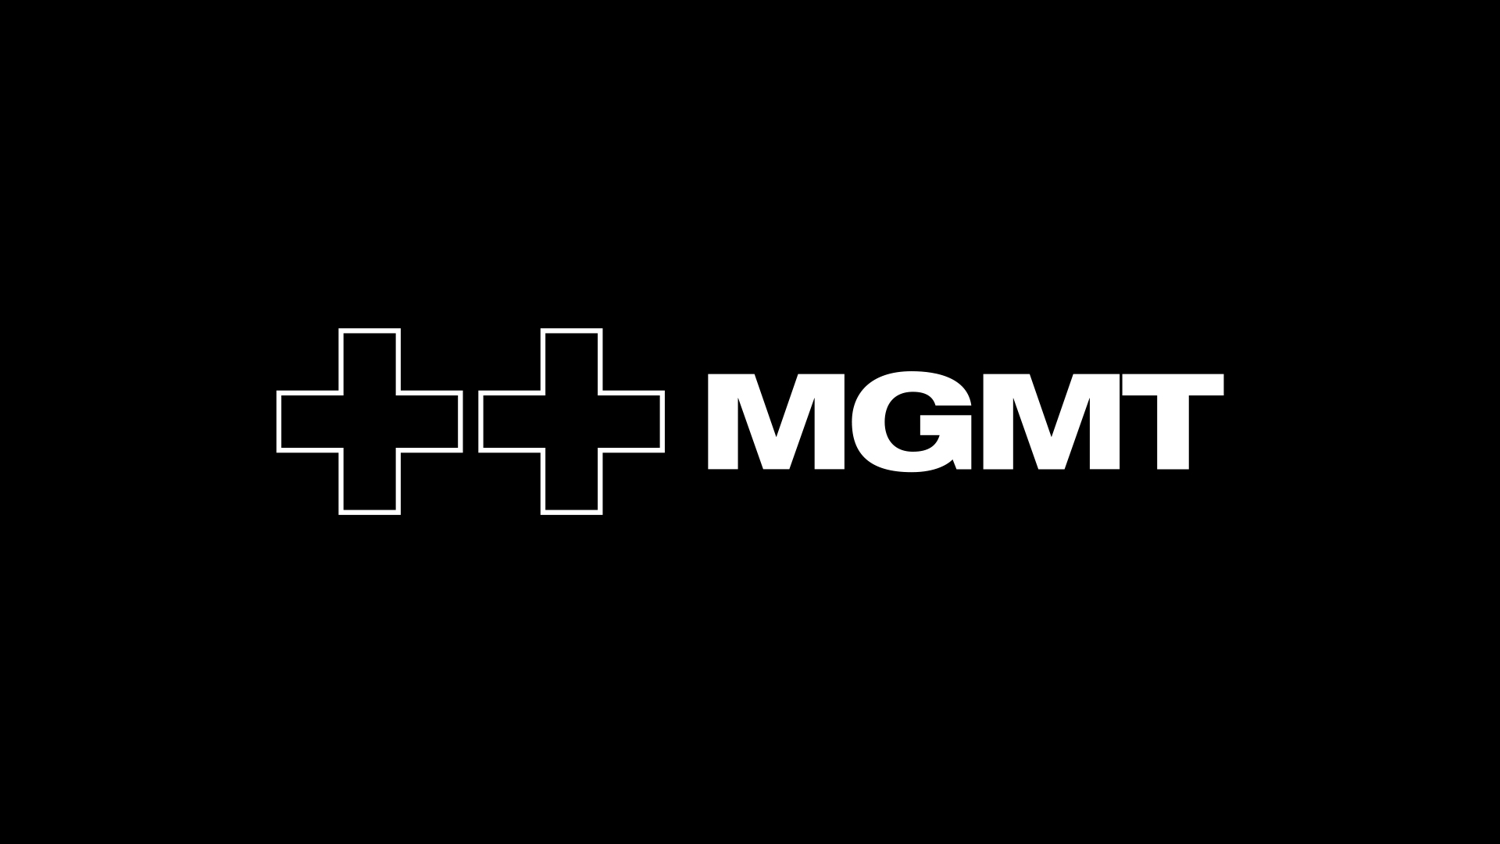 Ditto MGMT logo - white/dark 16:9